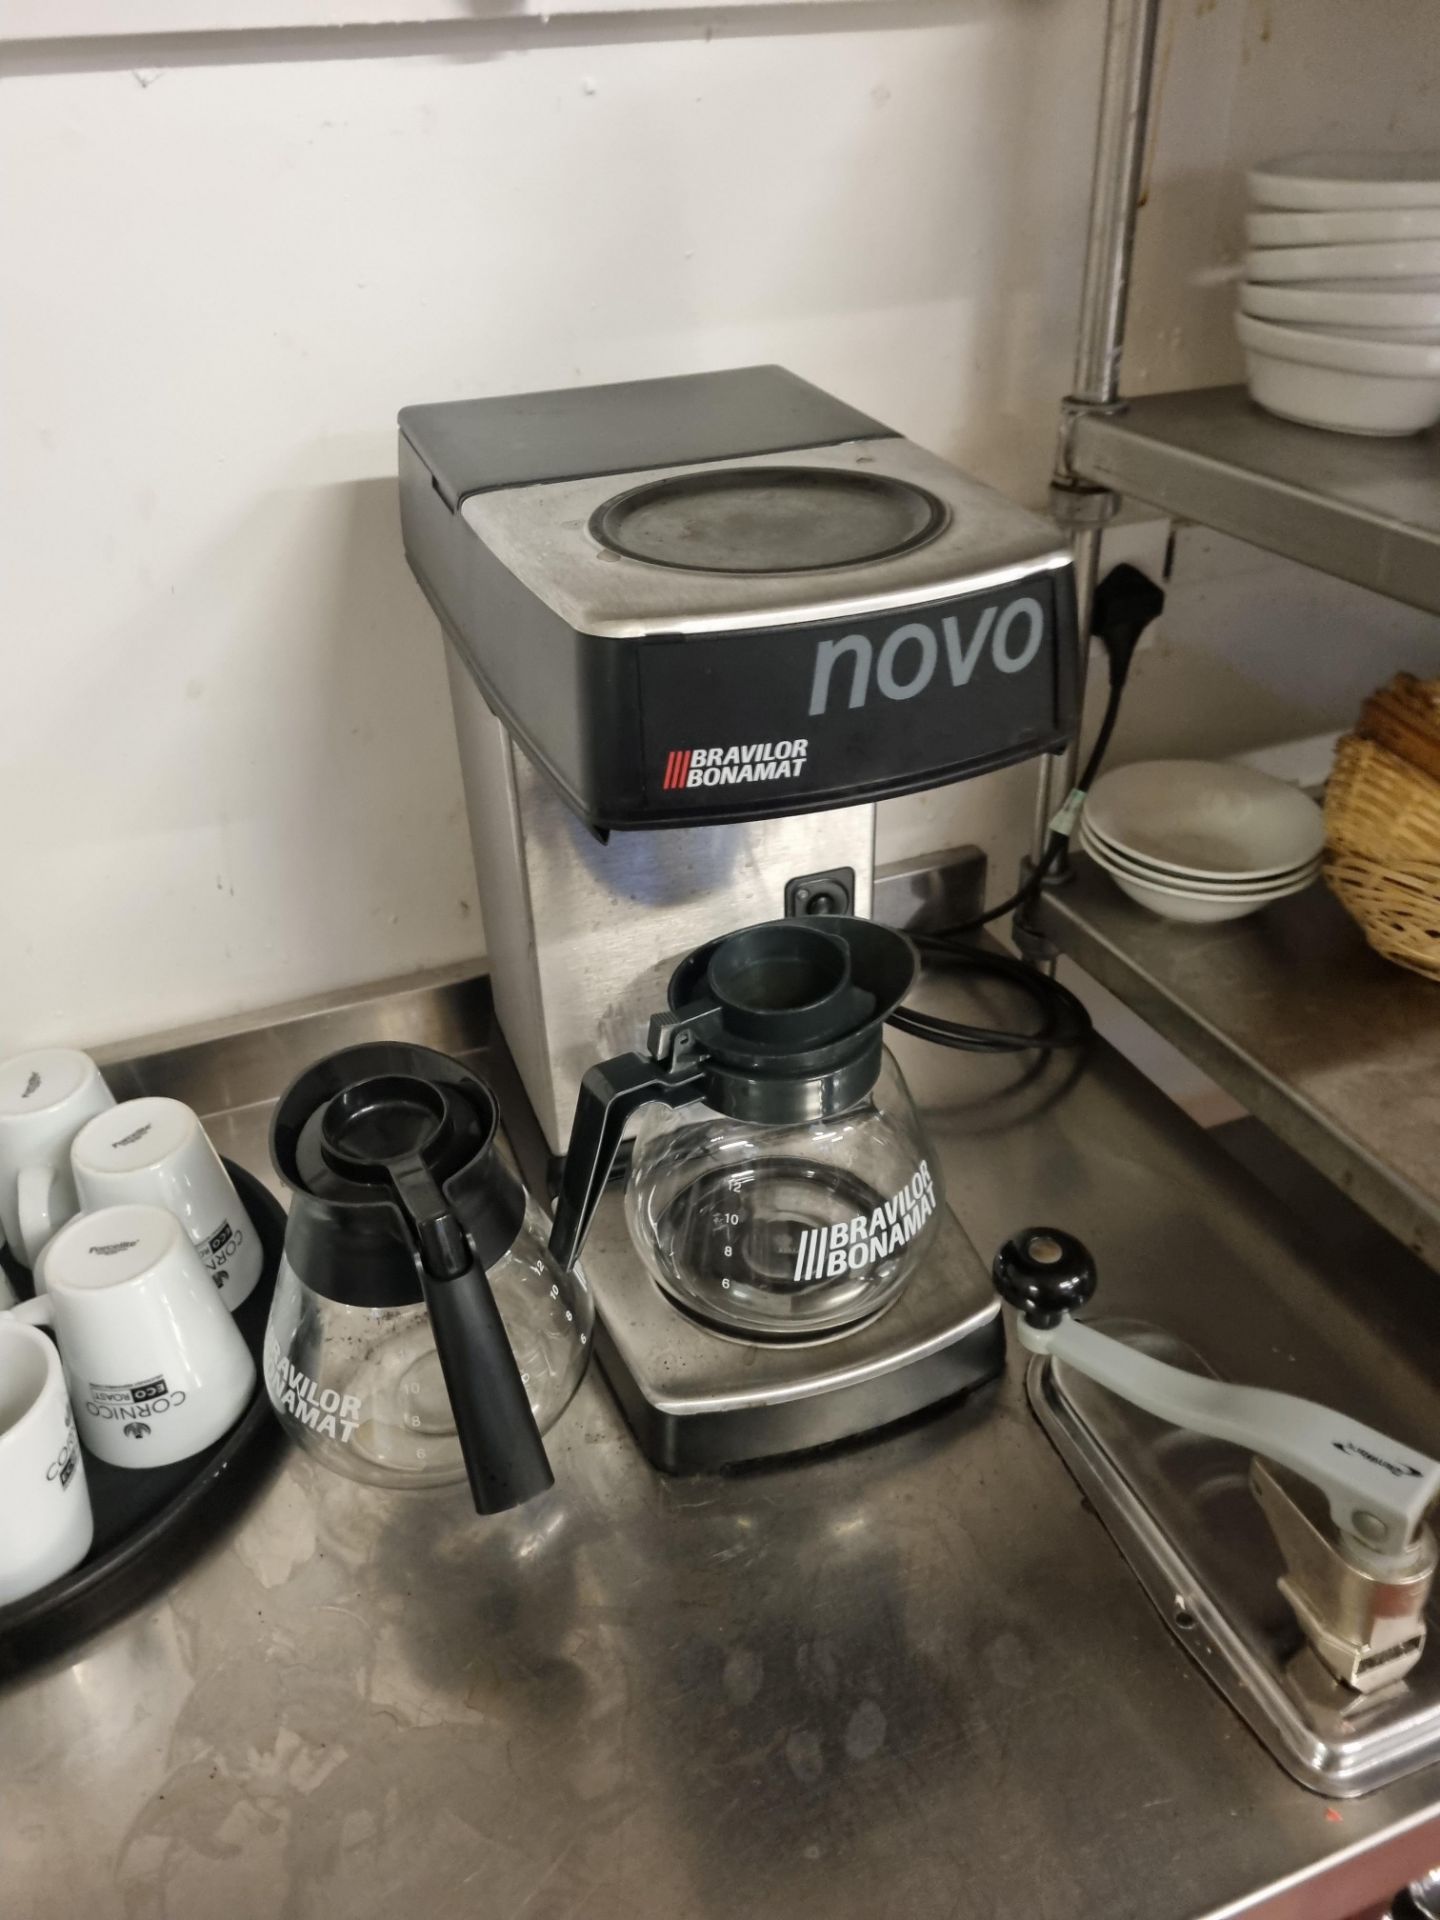 Bravilor Bonamat Novo Coffee Percolator Complete With 2 Glass Jugs